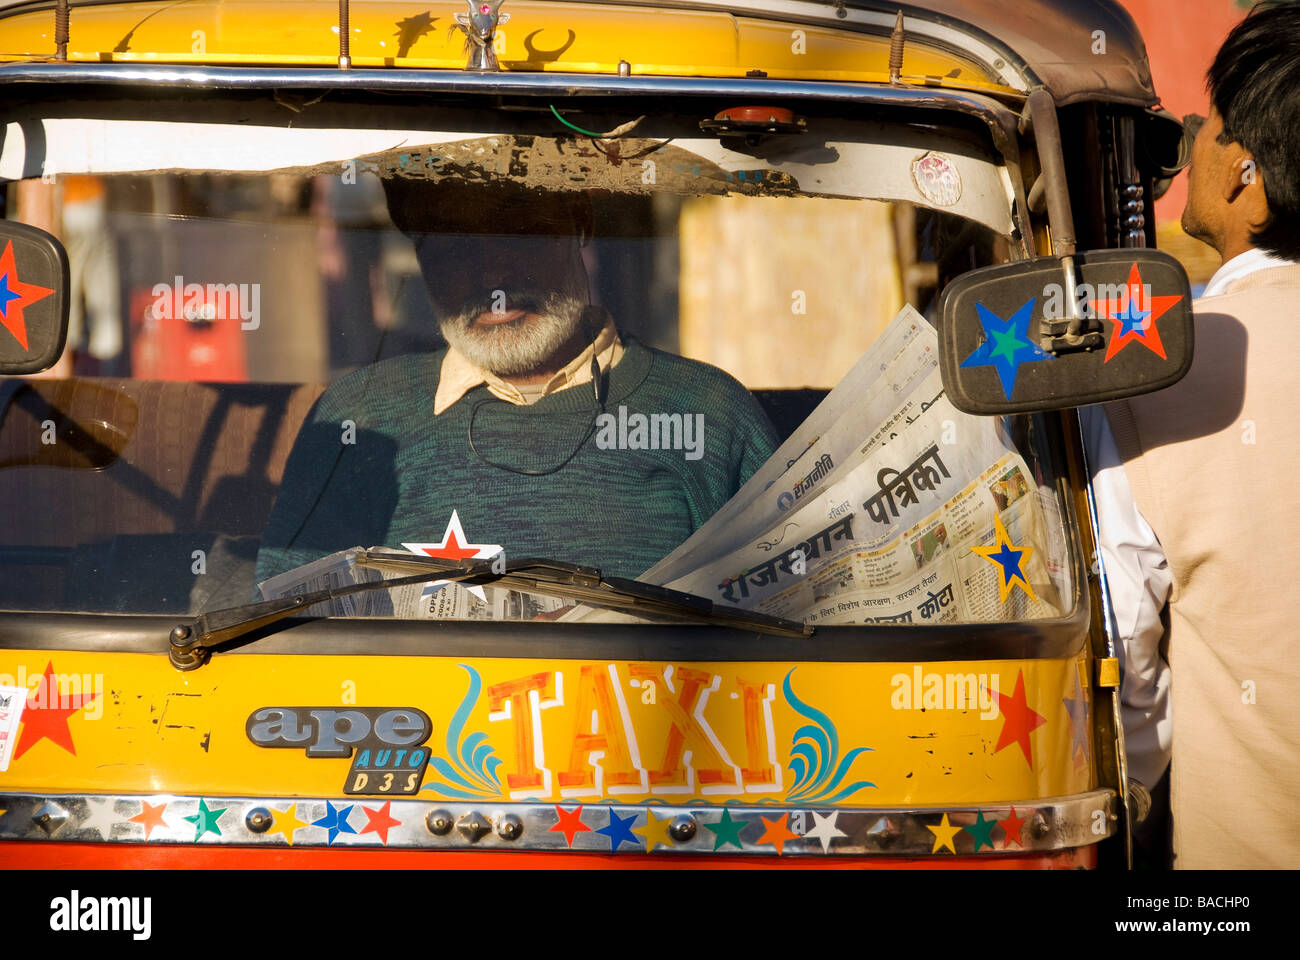 India, Rajasthan State, Jaipur, auto-rickshaw, 3 wheels taxi Stock Photo